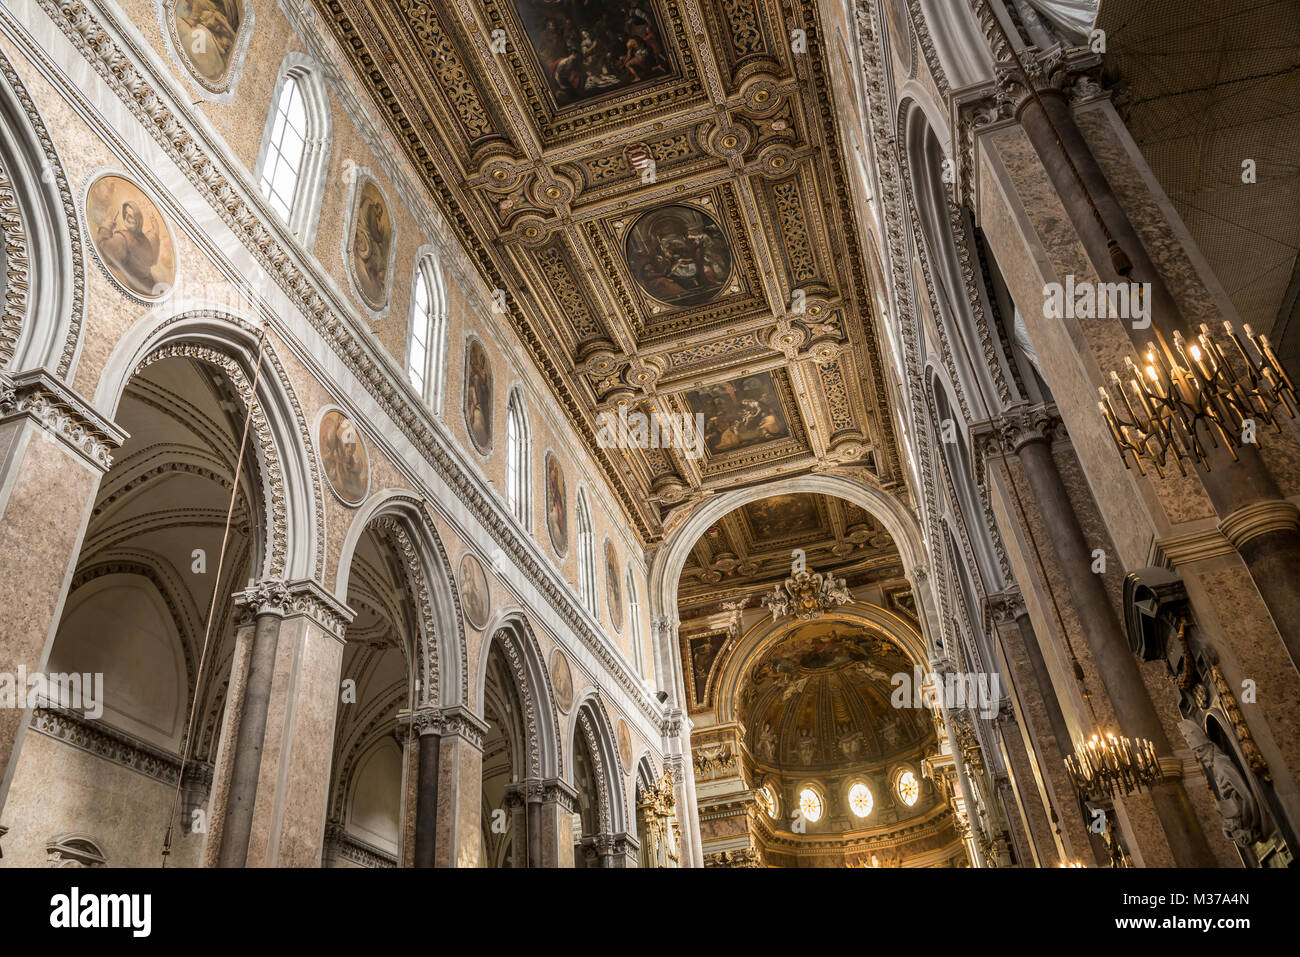 Decorated interior of Roman Catholic Cathedral Santa Maria Assunta - San Gennaro in Via Duomo. Naples, Italy Stock Photo